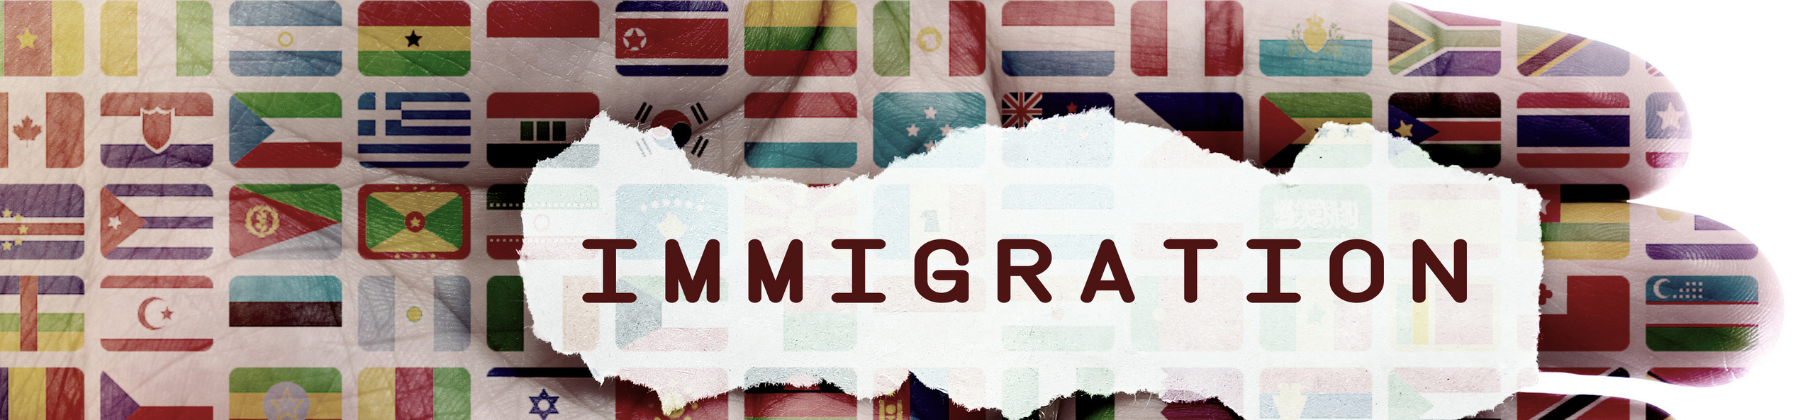 001immigration.jpg